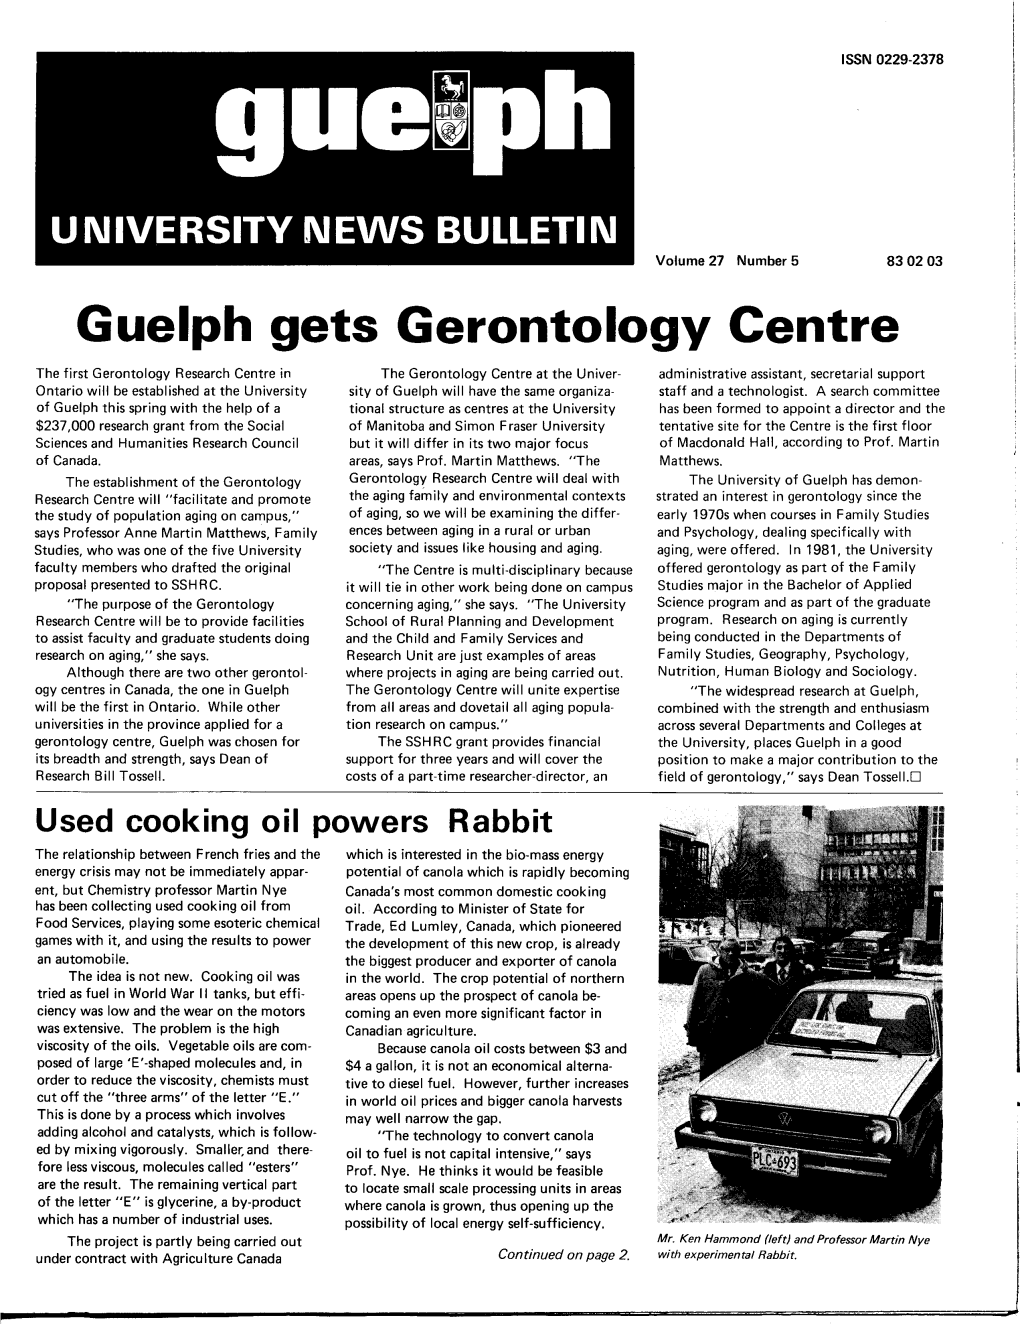 Guelph Gets Gerontology Centre